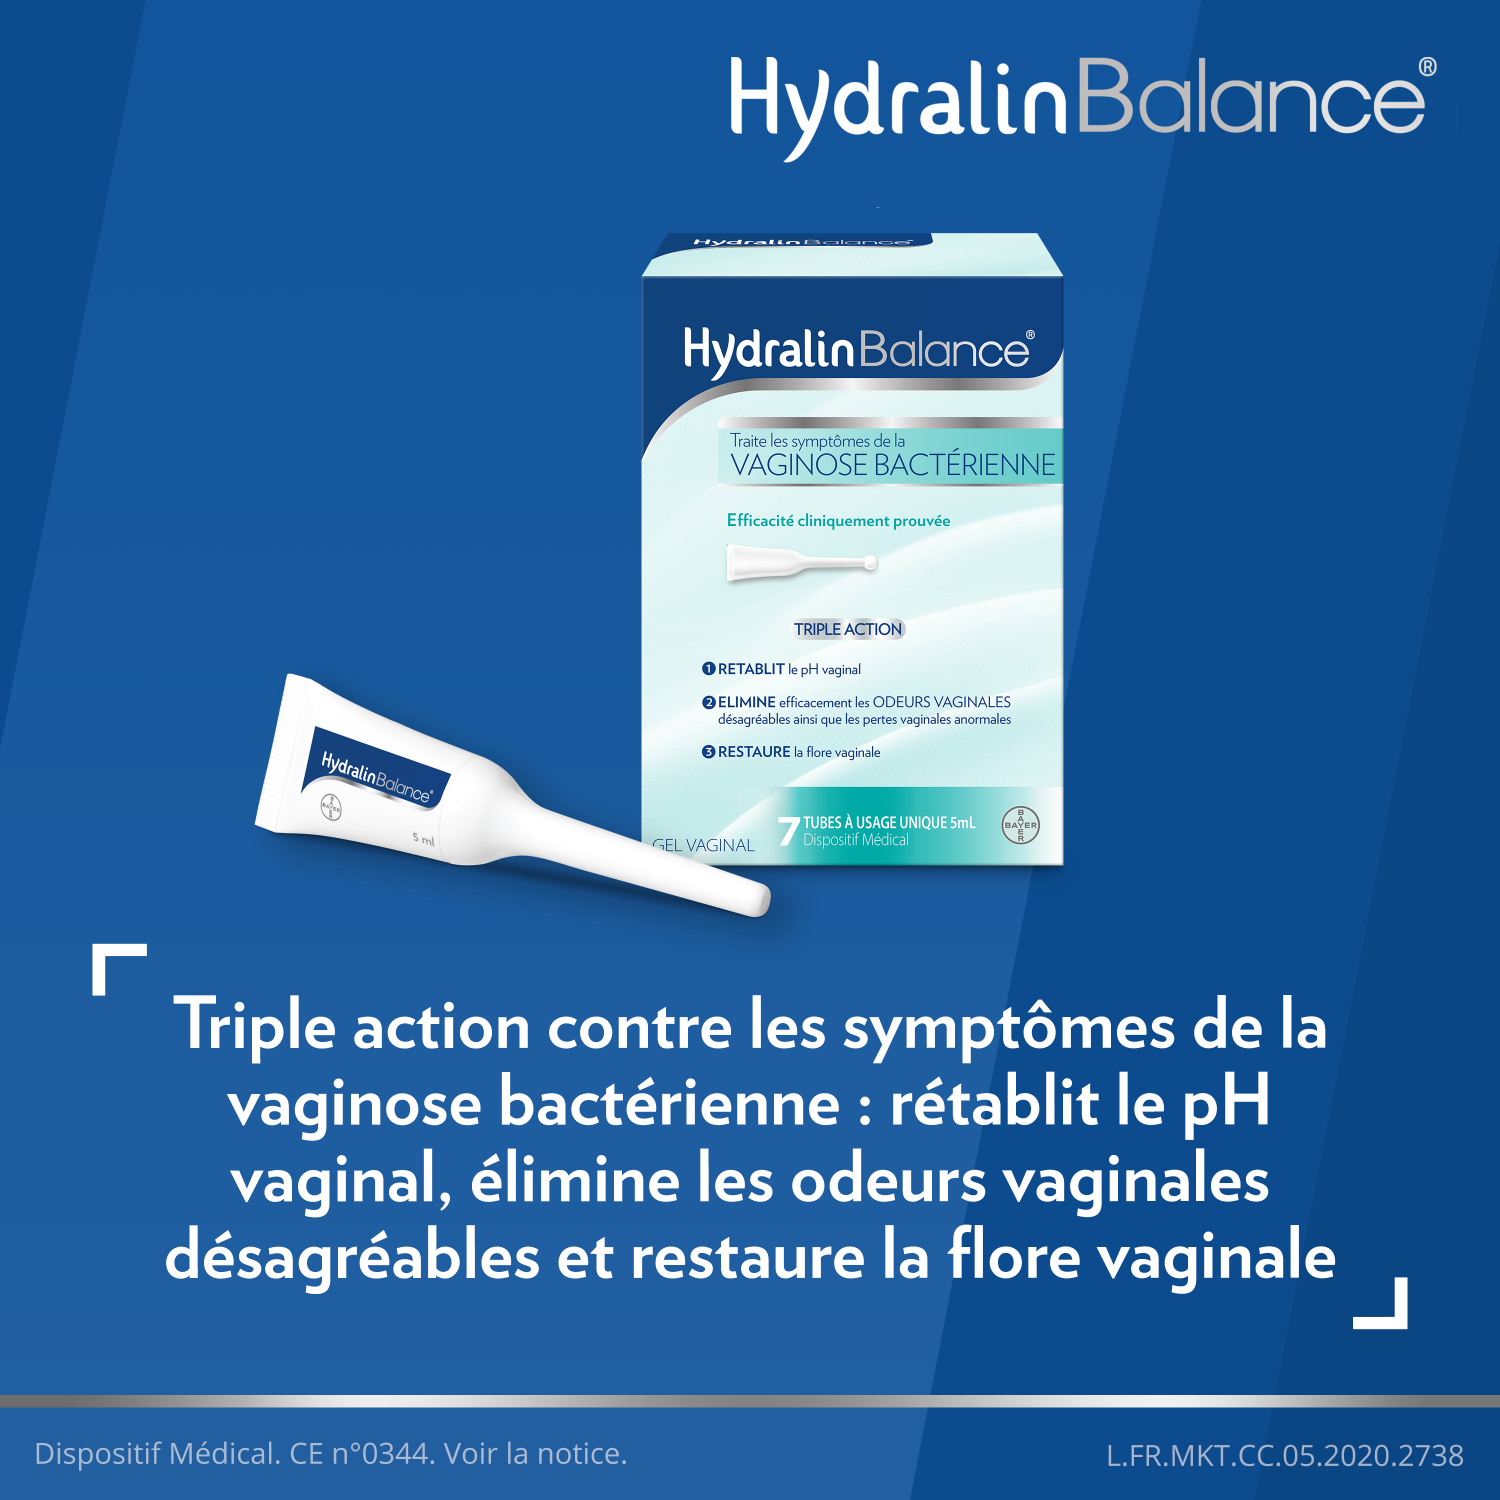 Hydralin Test Auto-Diagnostic Vaginal 1 Test